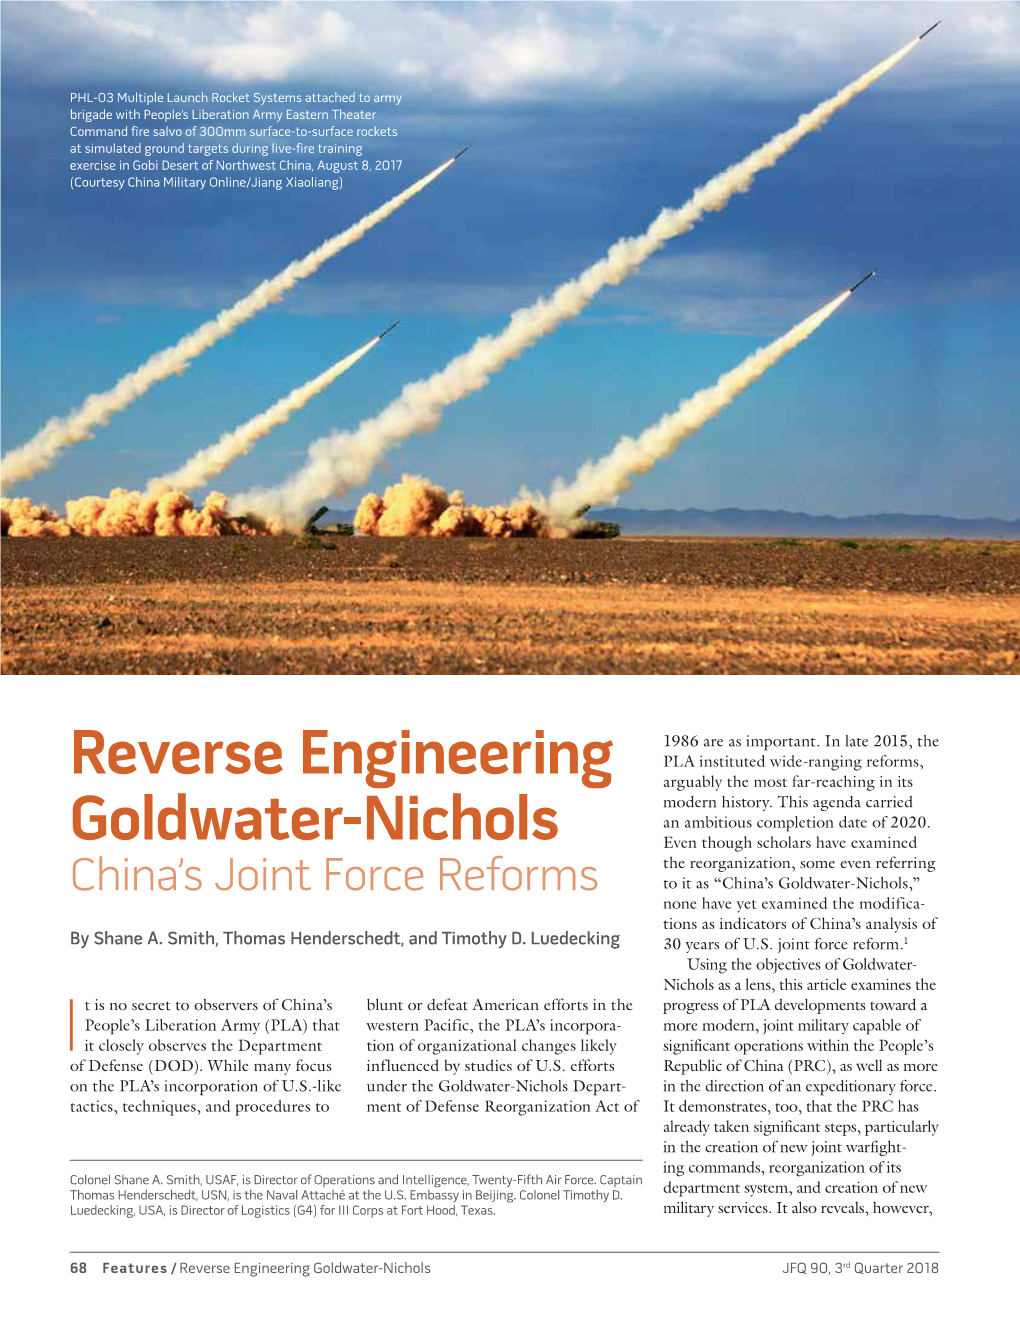 Reverse Engineering Goldwater-Nichols